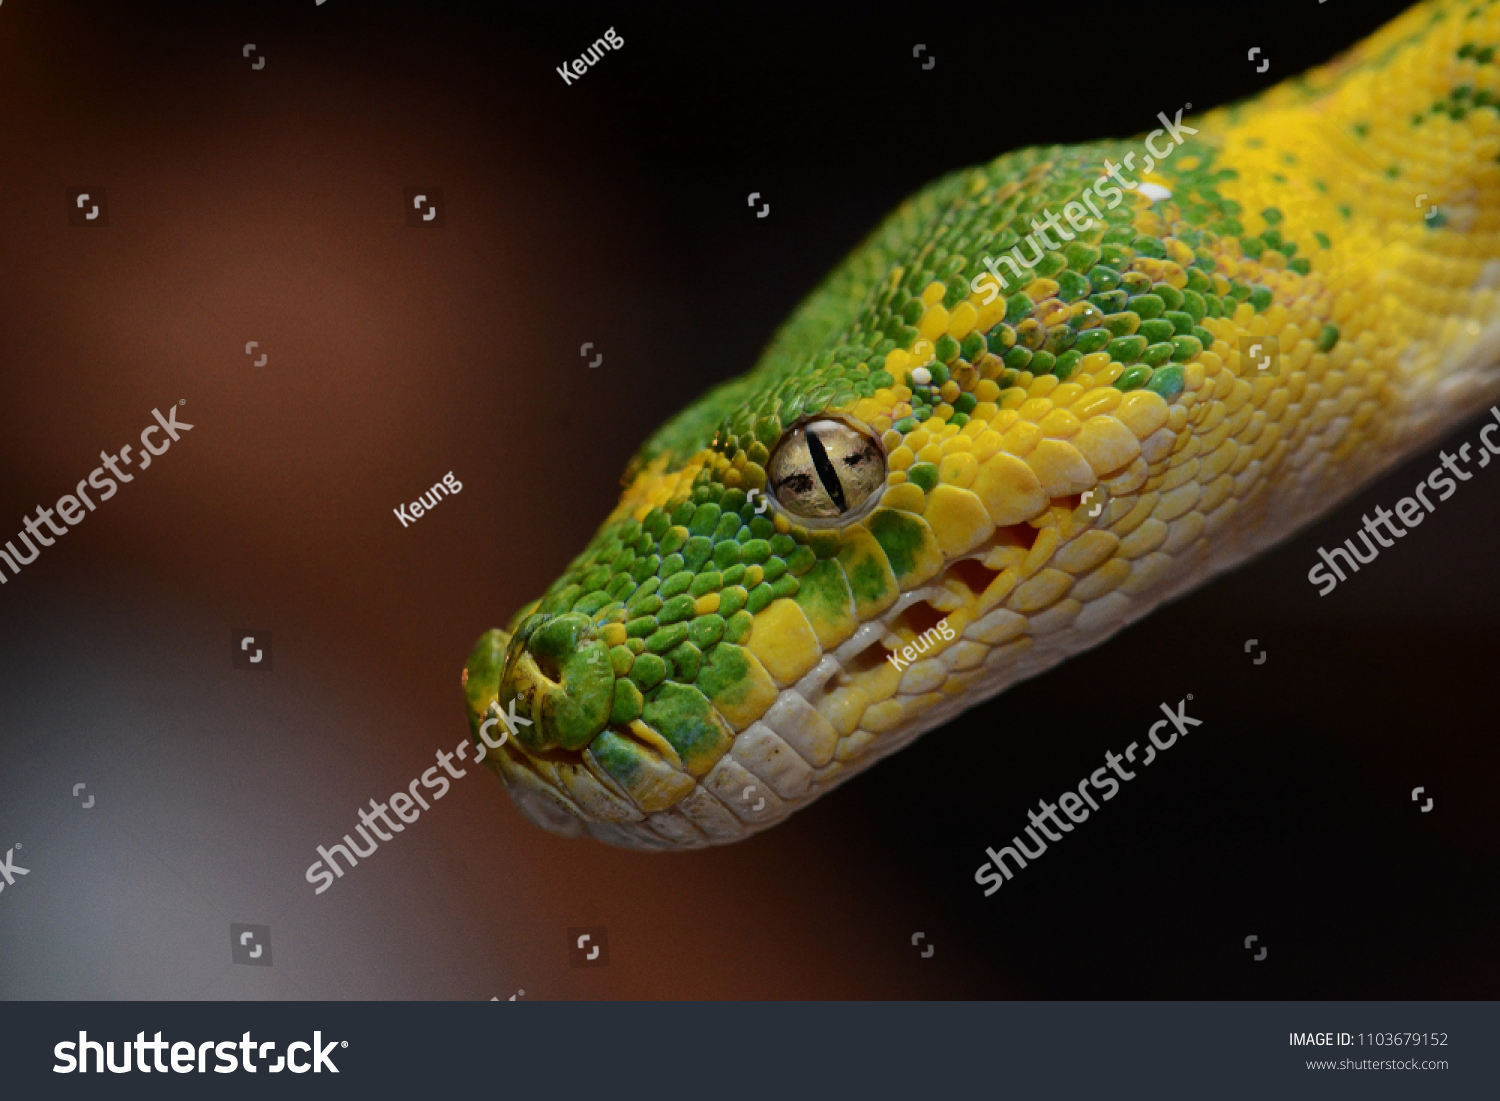 Green Tree Python Snake Stock Photo Edit Now 1103679152